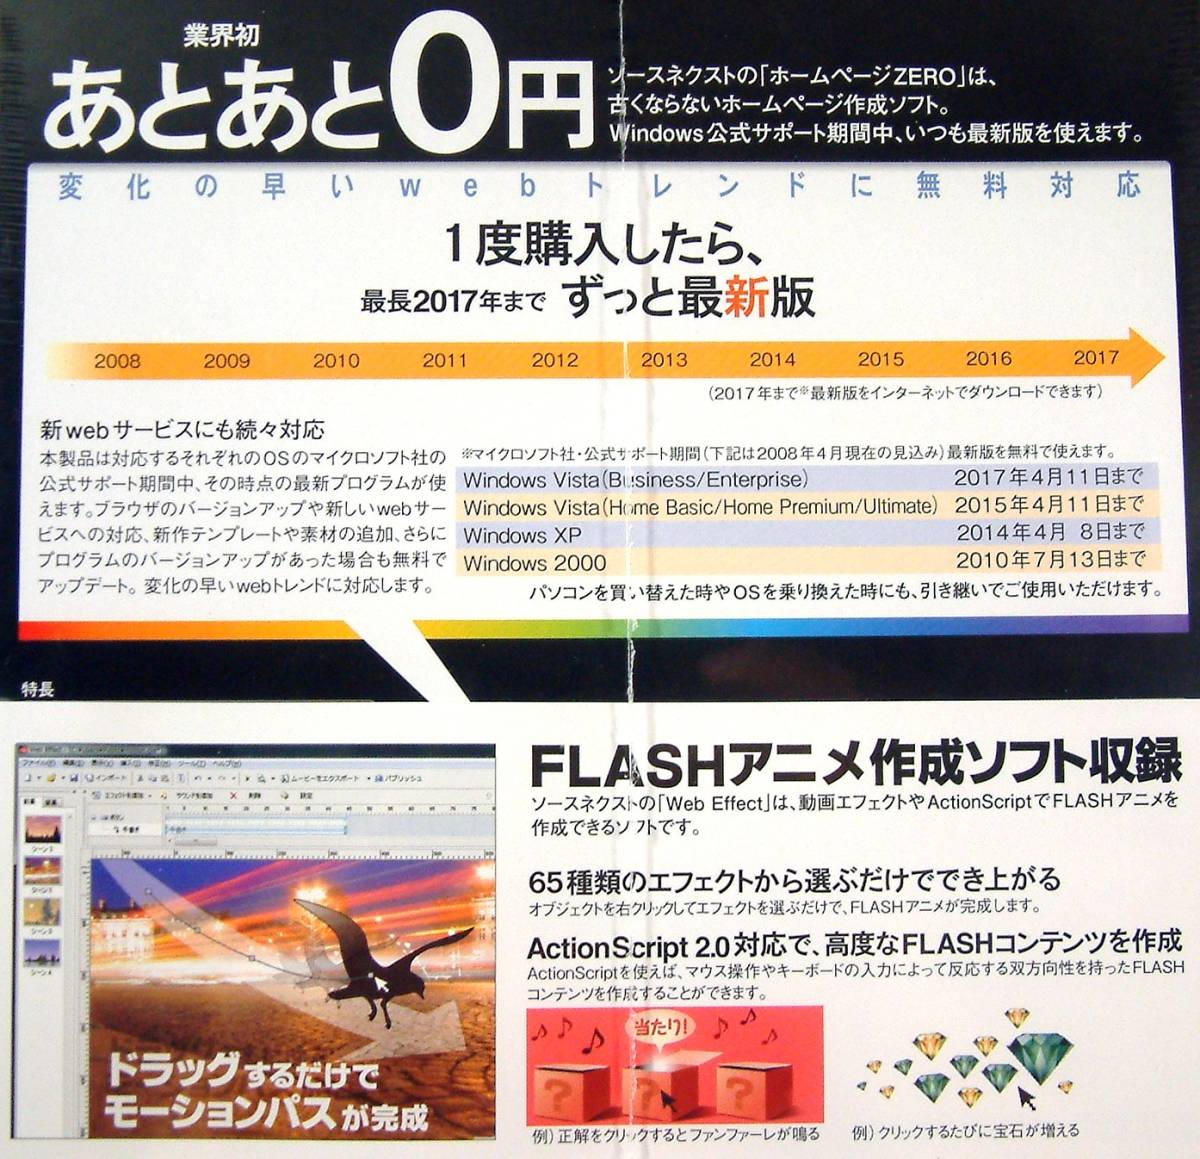 [3298] sauce next home page ZERO Premium Pack new goods web page making soft Zero premium Flash anime Web WWW SourceNext